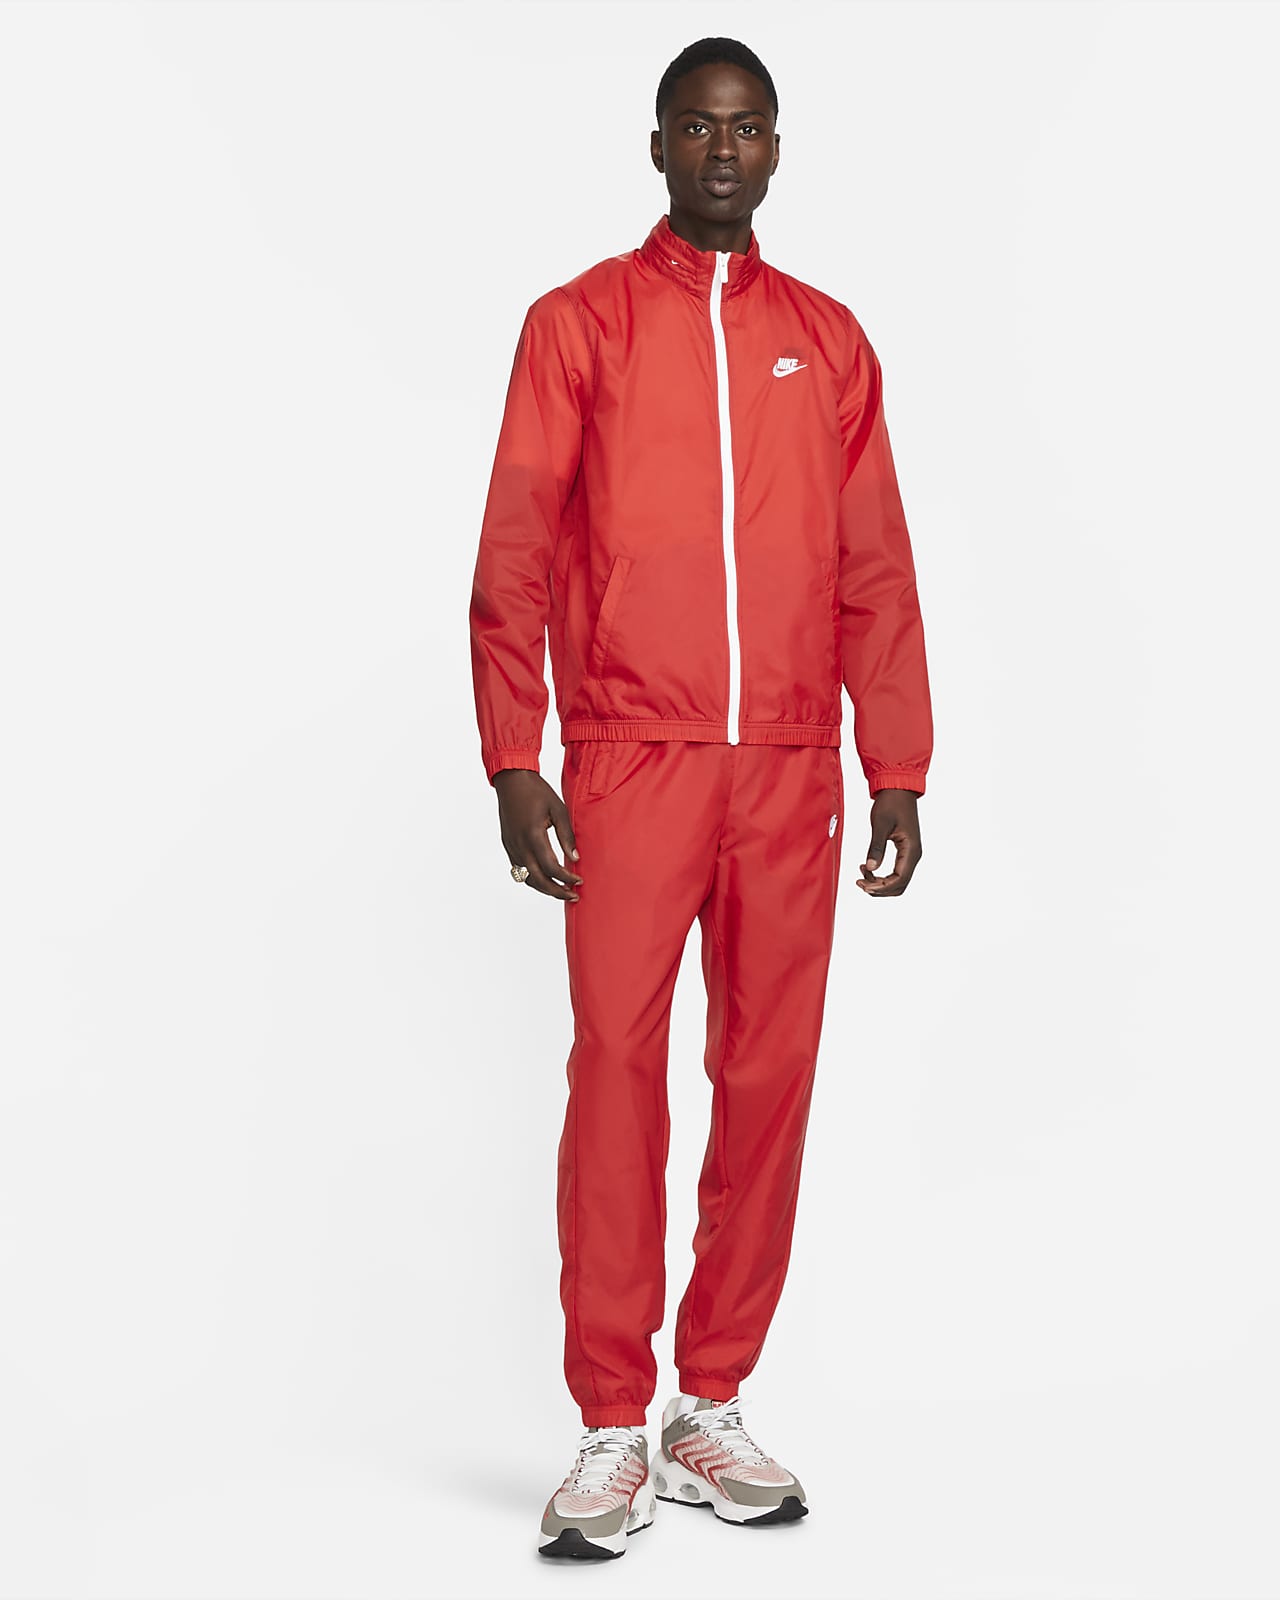 Slechthorend Toeschouwer Fietstaxi Nike Sportswear Club Herren-Trainingsanzug aus Webmaterial mit Futter. Nike  AT